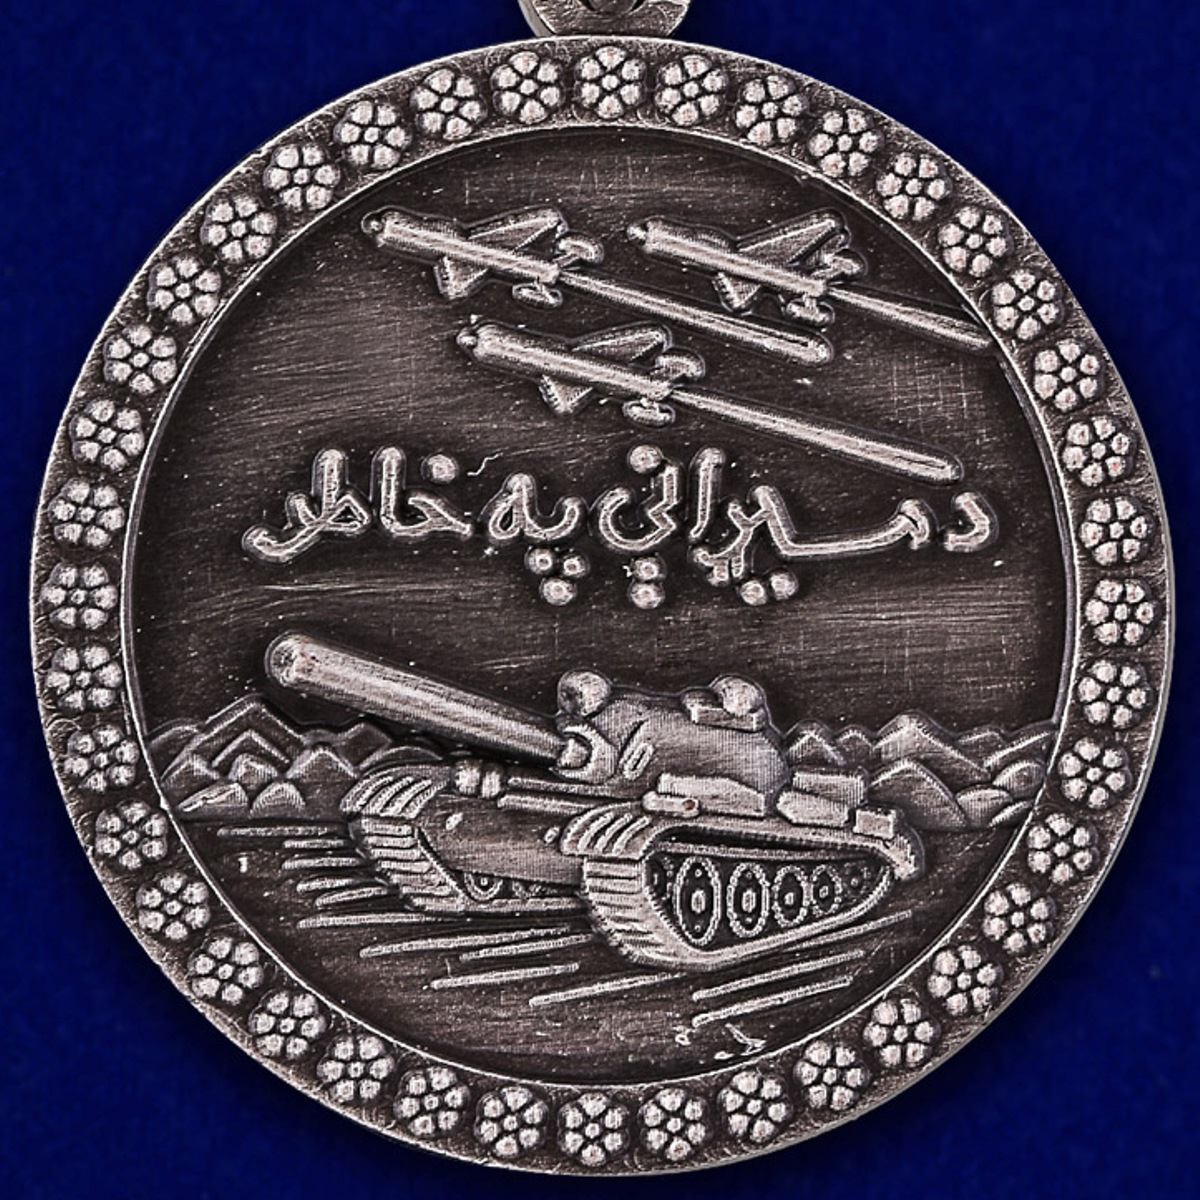 Отвага за афганистан. Медаль Афганистан за отвагу. Медаль за отвагу СССР афганцев. Медаль отвага Афганистан. Медали дра.